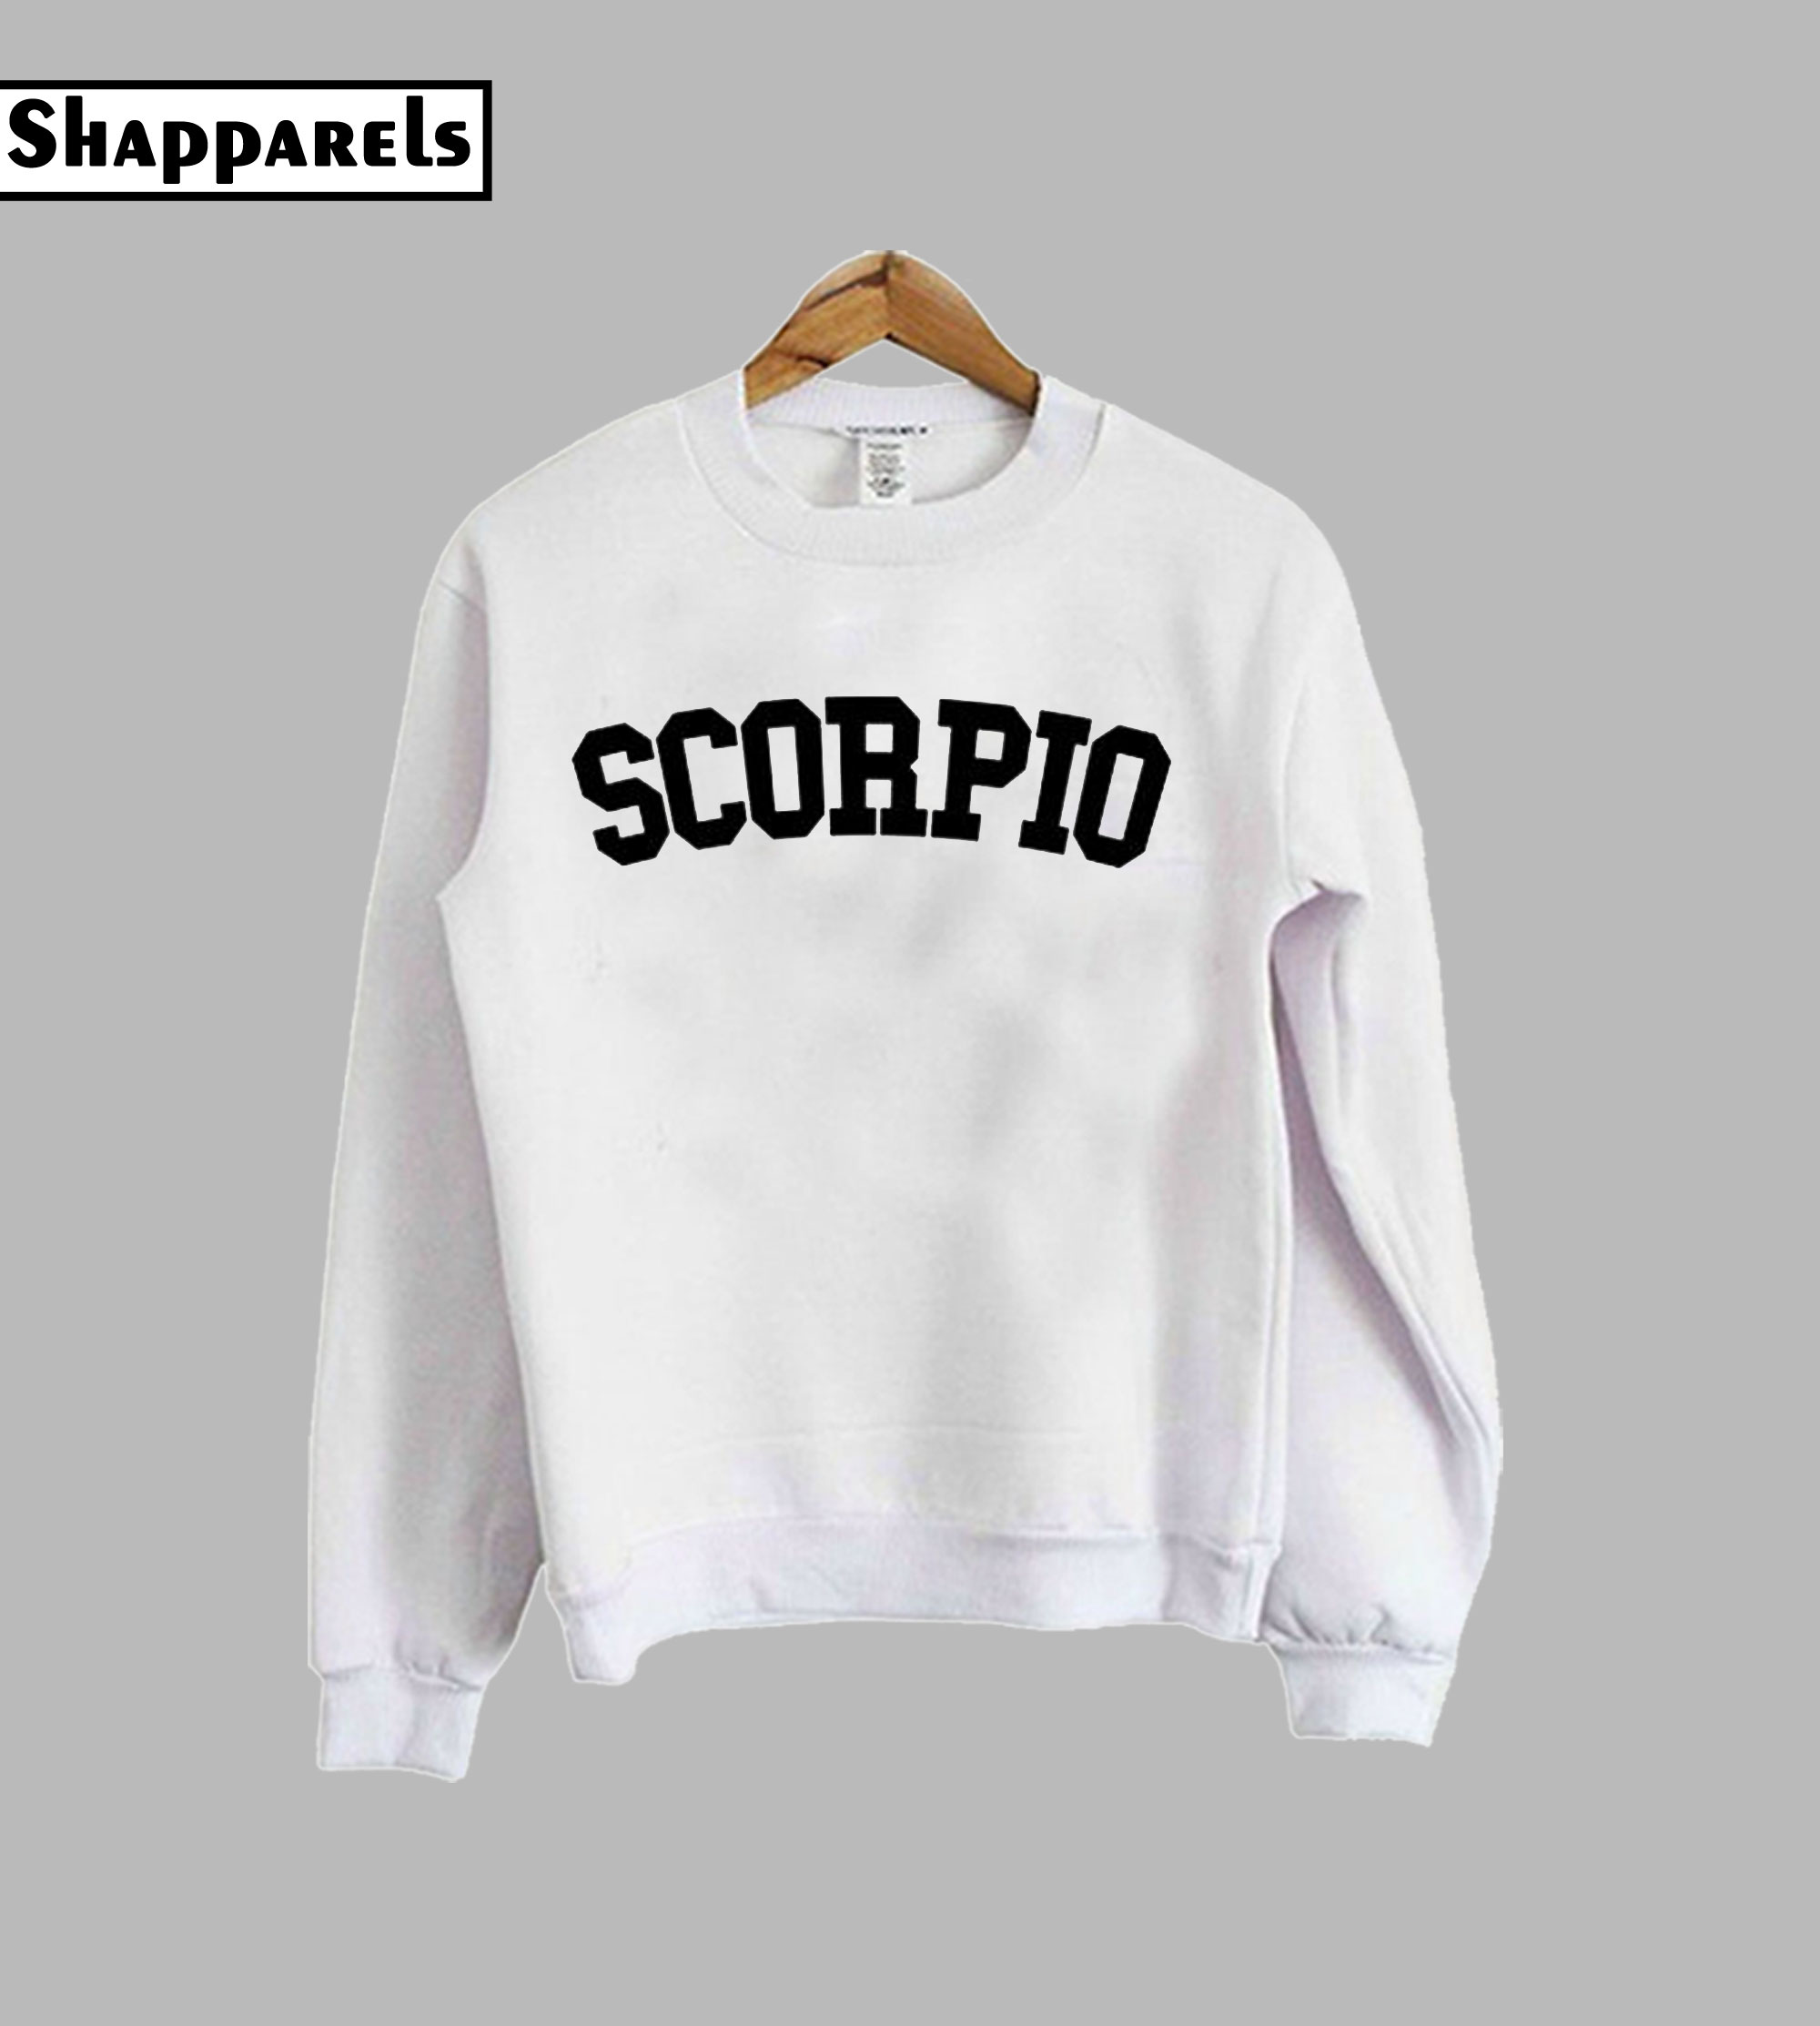 scorpio sweatshirt good american